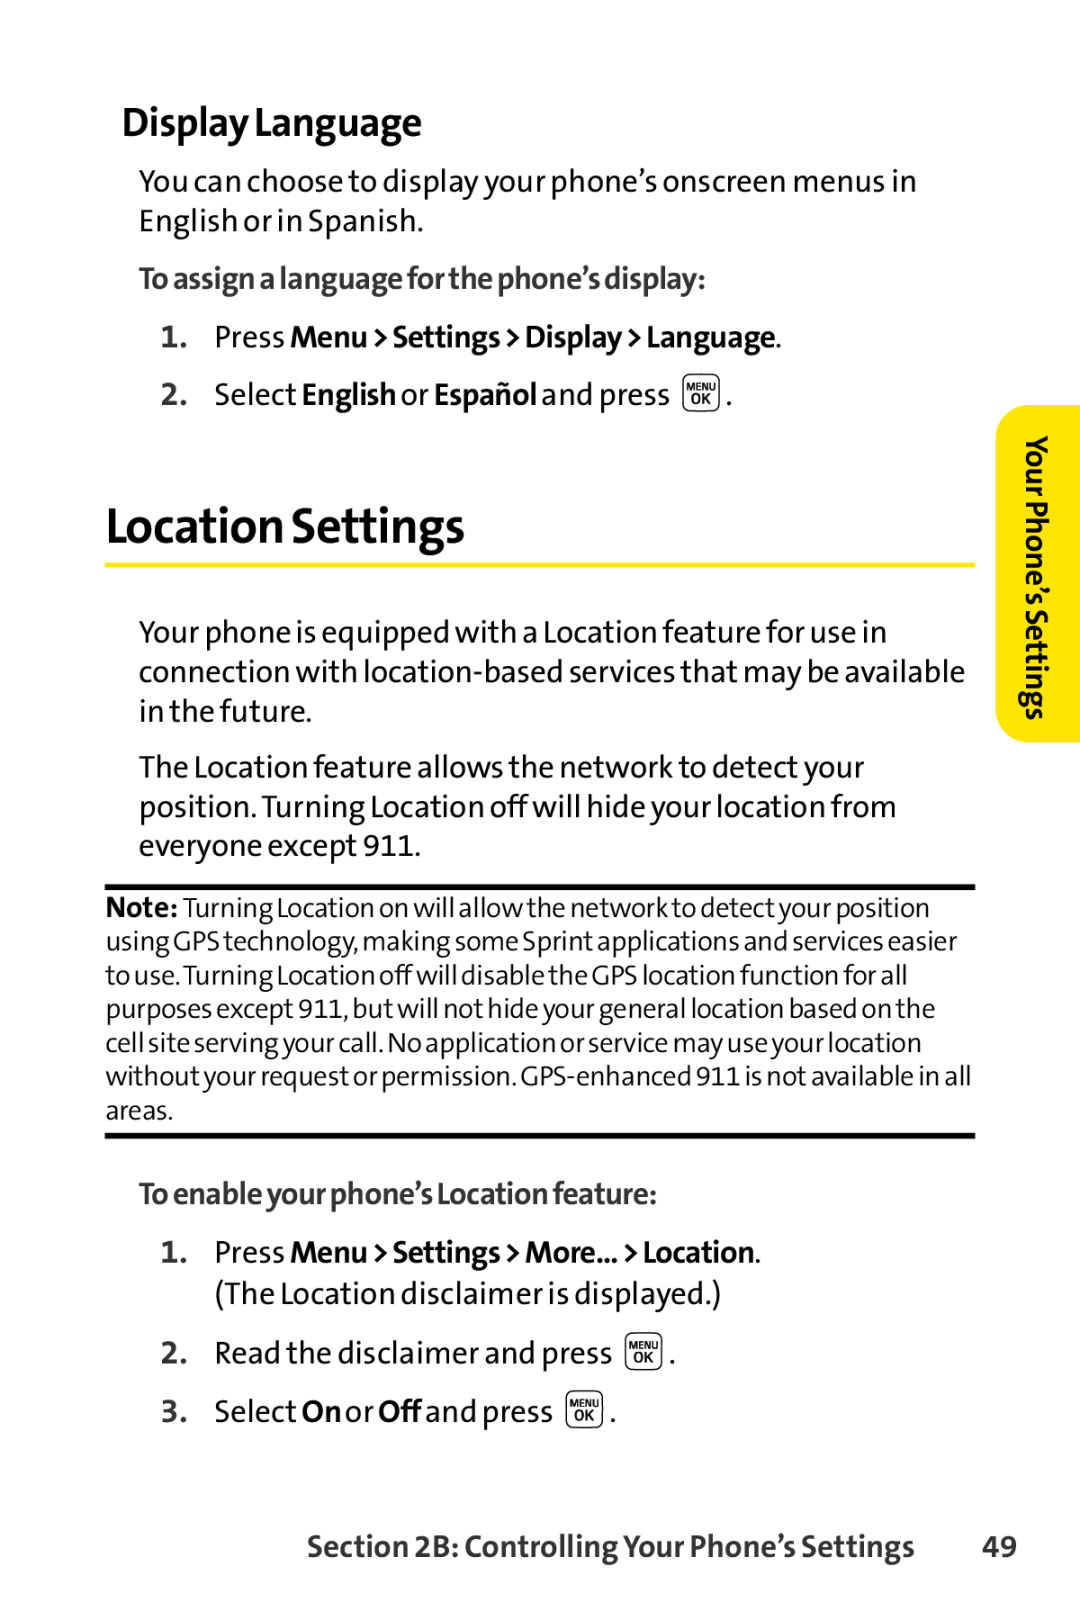 Sprint Nextel LX160 Location Settings, Display Language, Toassignalanguageforthephone’sdisplay, Your Phone’s Settings 